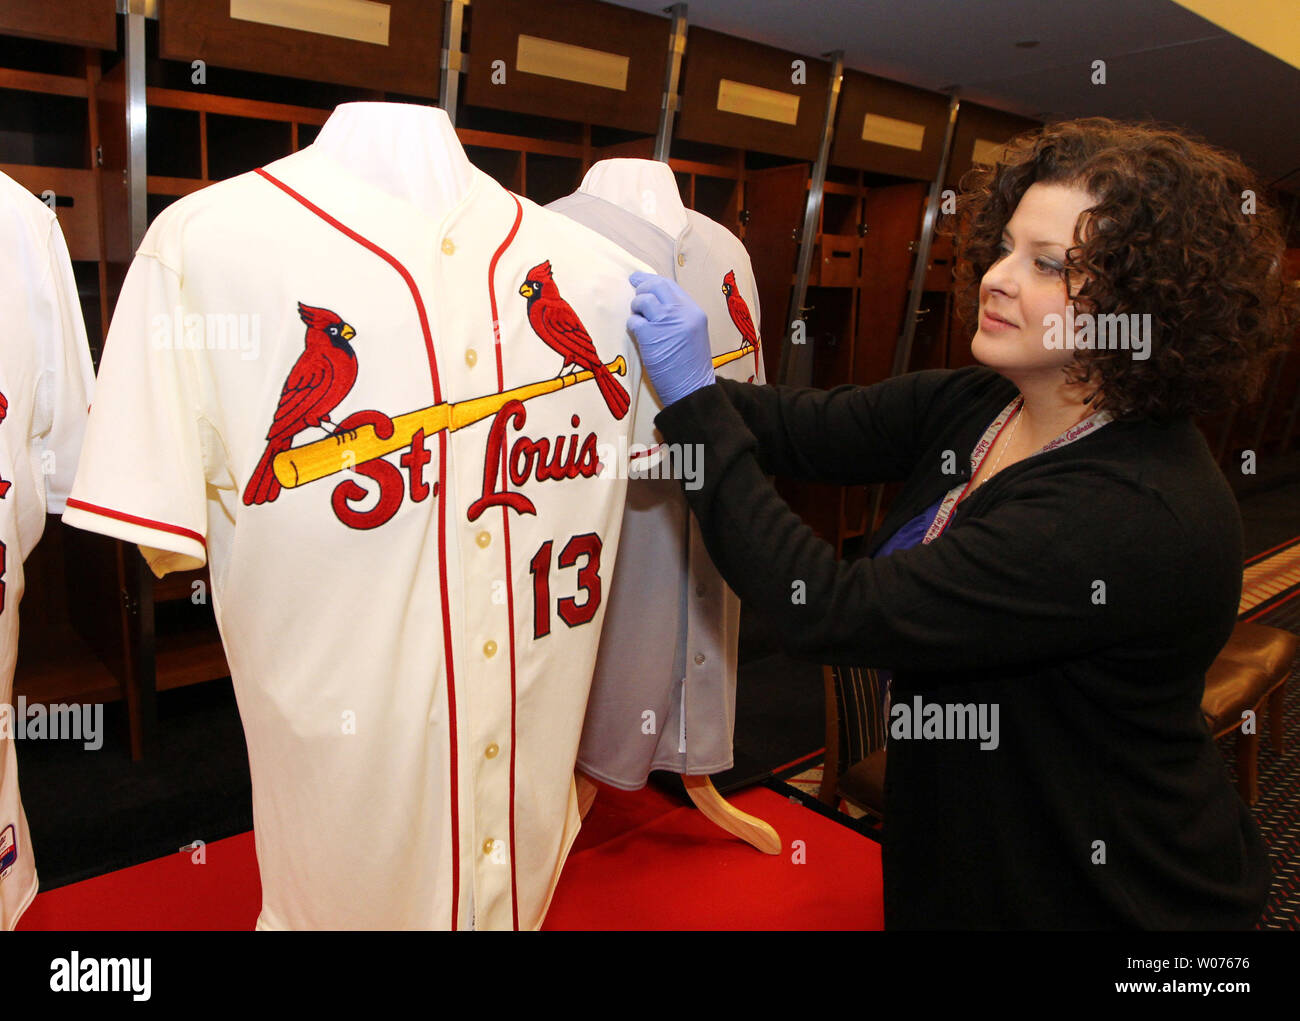 Cardinals adding alternate uniform 